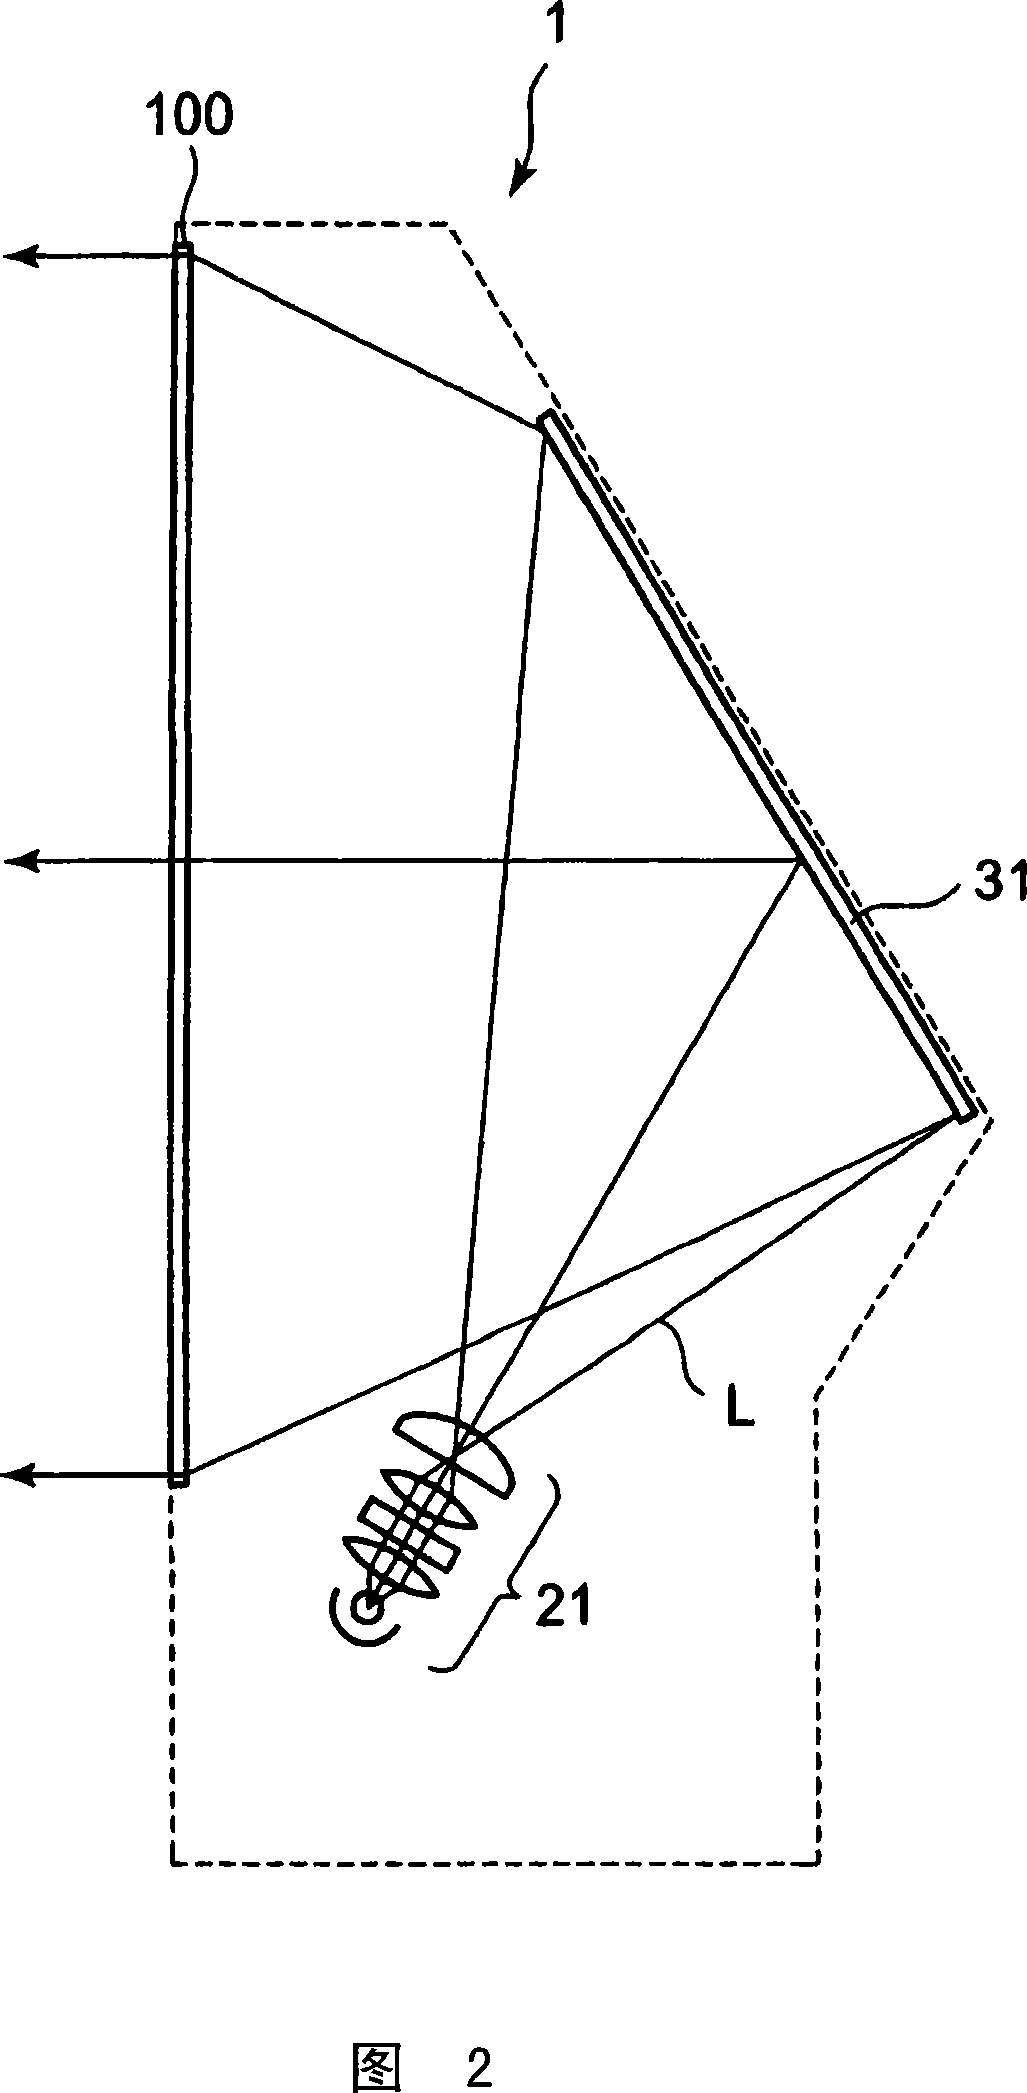 Diffusion optical sheet, deflection optical sheet, and transmission screen